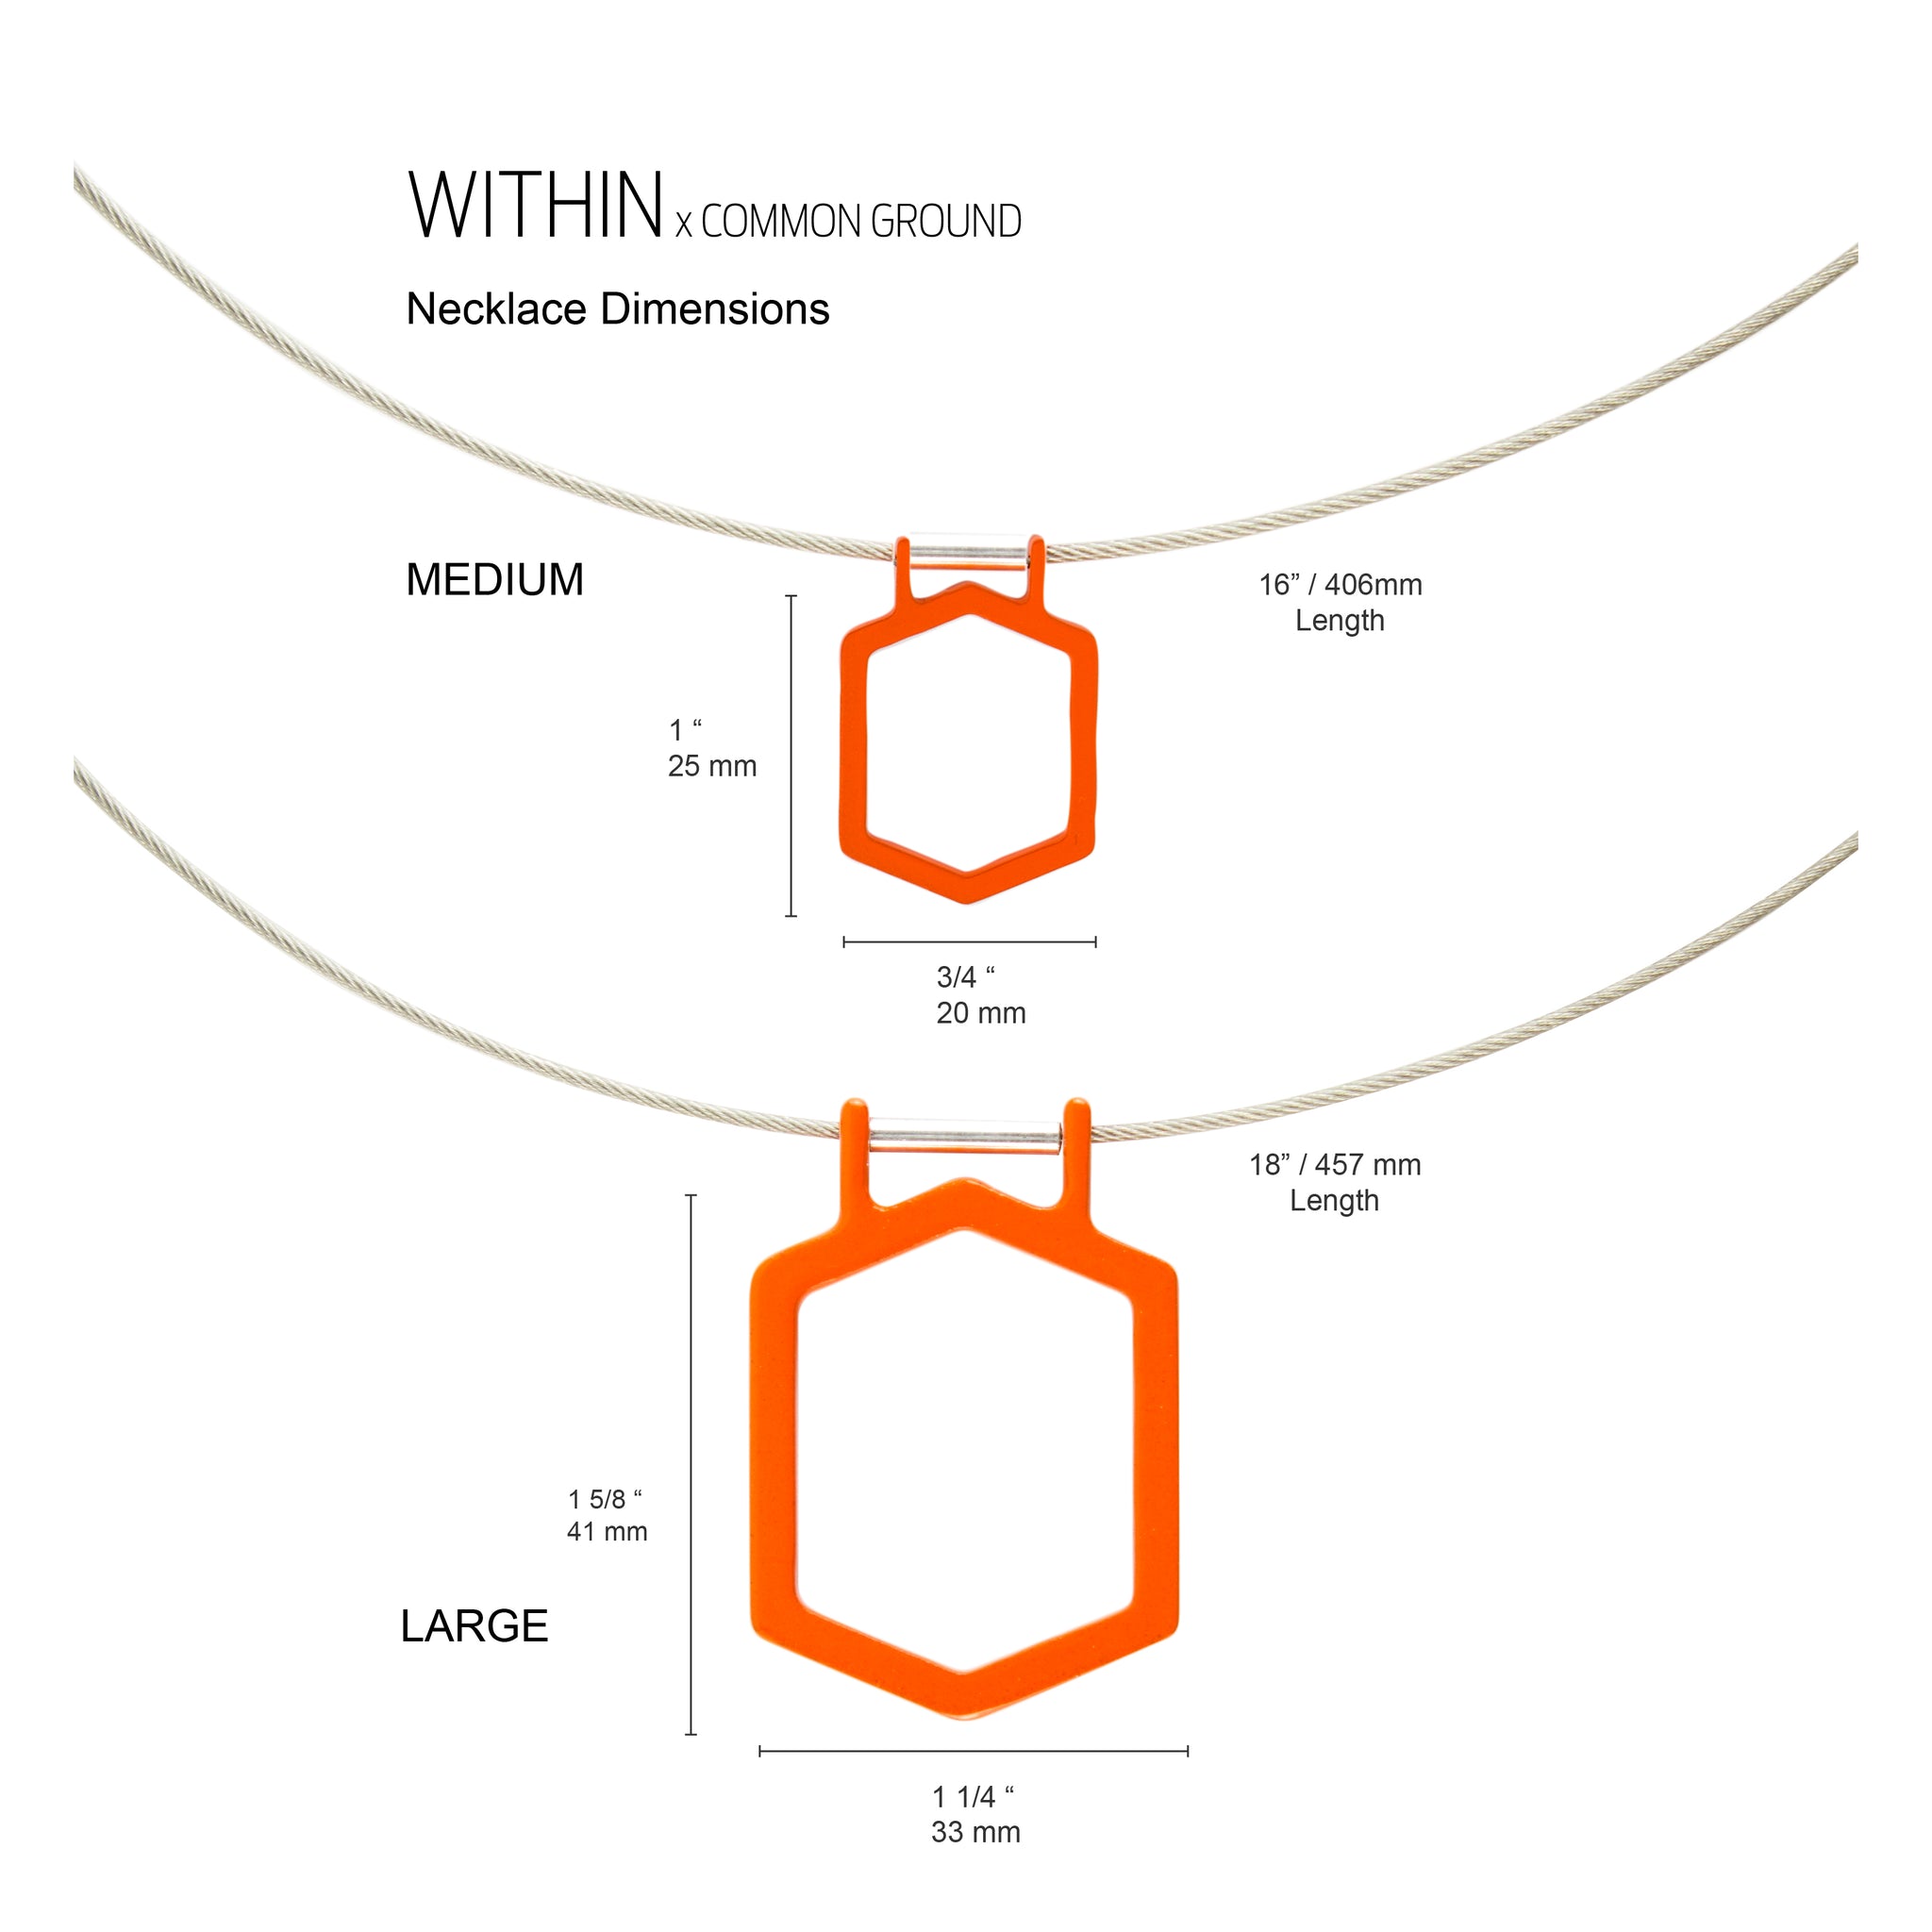 Vibrant_Orange - WITHIN x COMMON GROUND Necklace Dim View